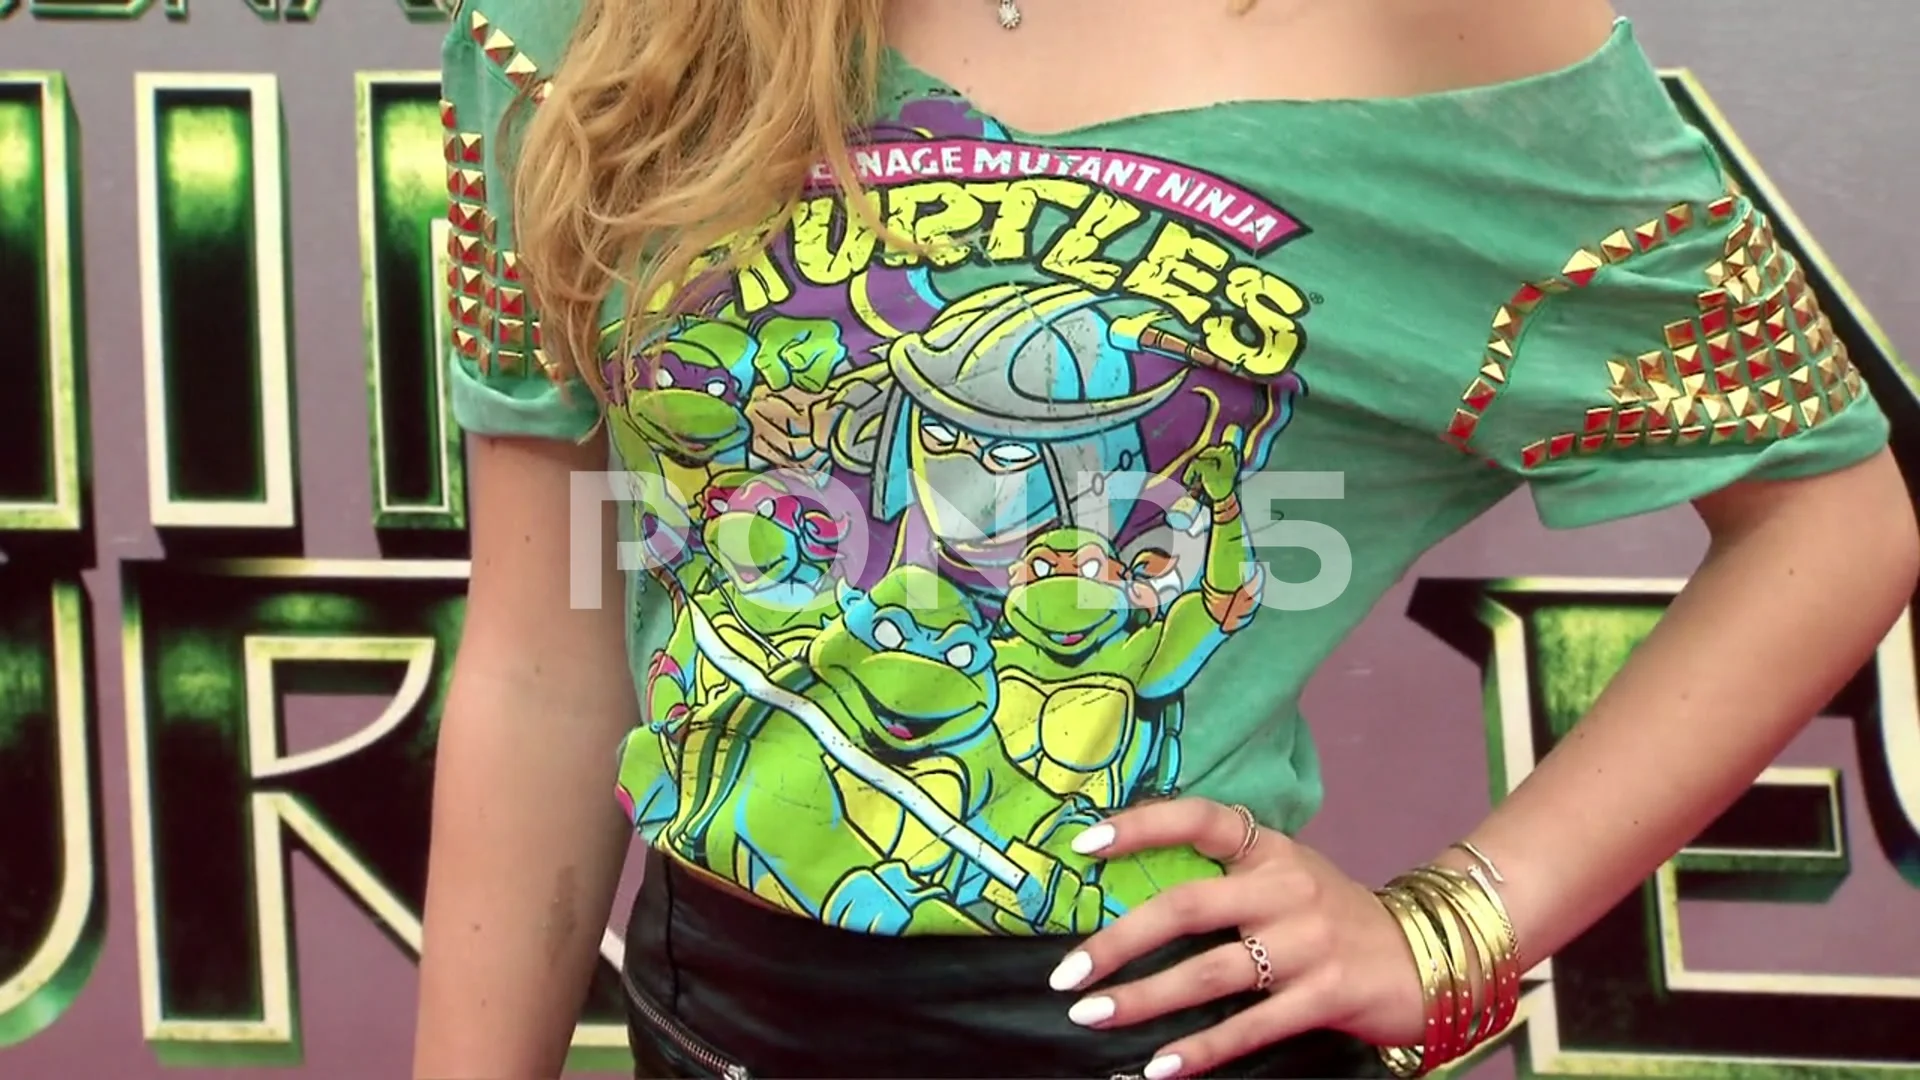 Teenage Mutant Ninja Turtles Turtle Smash Girls Youth Crop T-Shirt